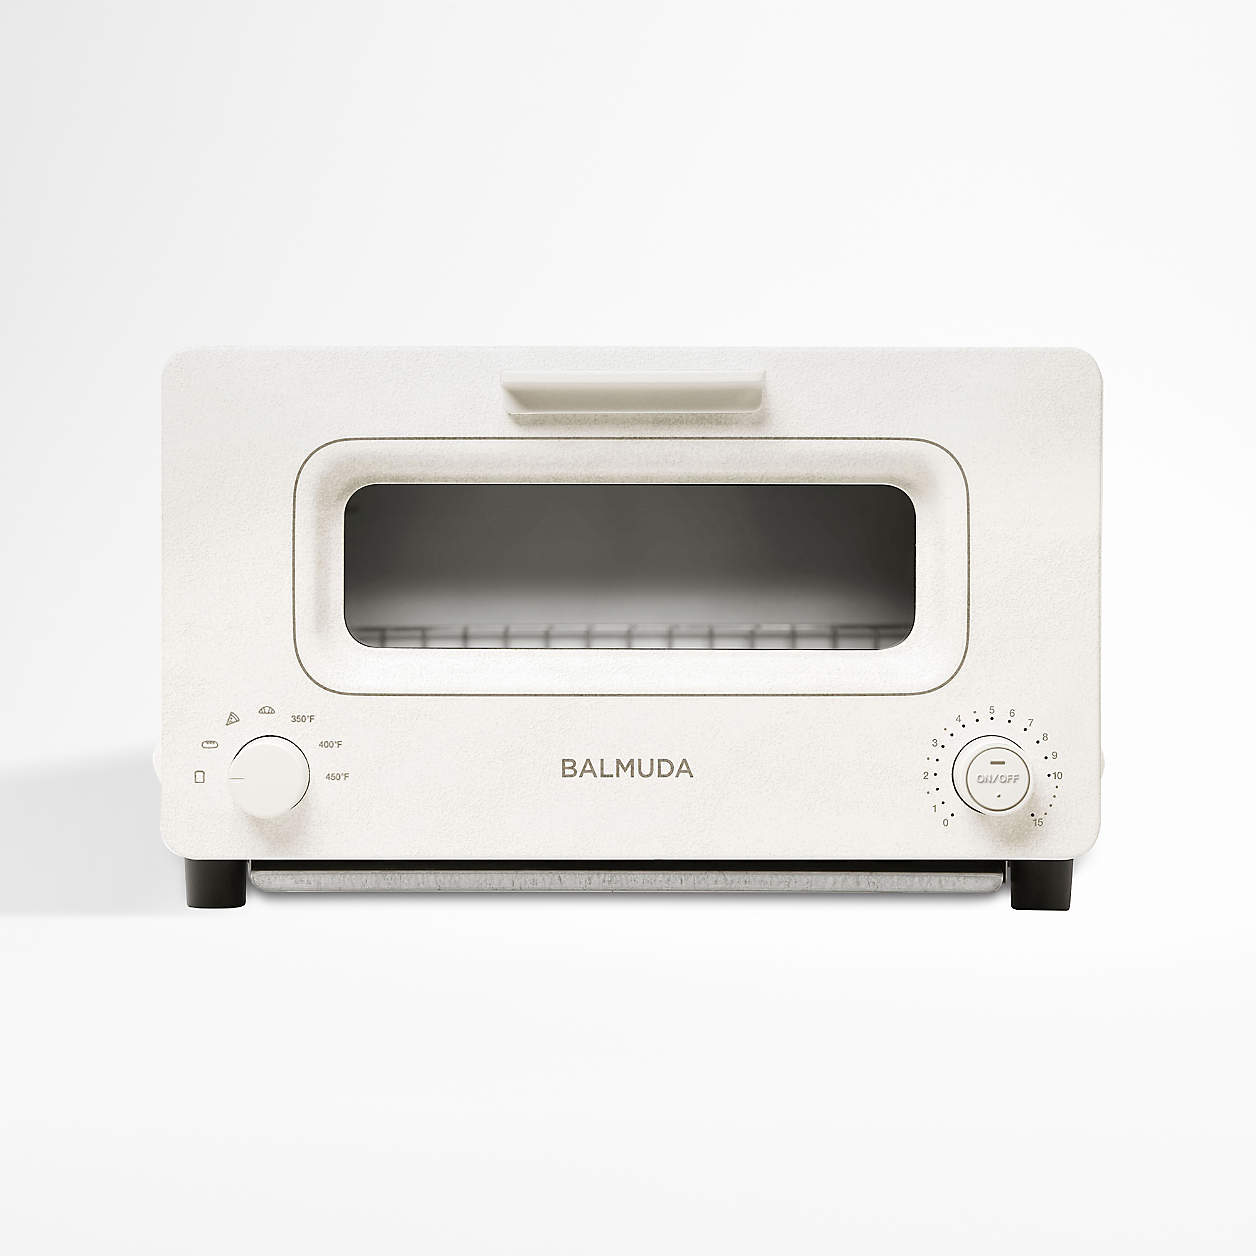 Balmuda The Toaster - $299